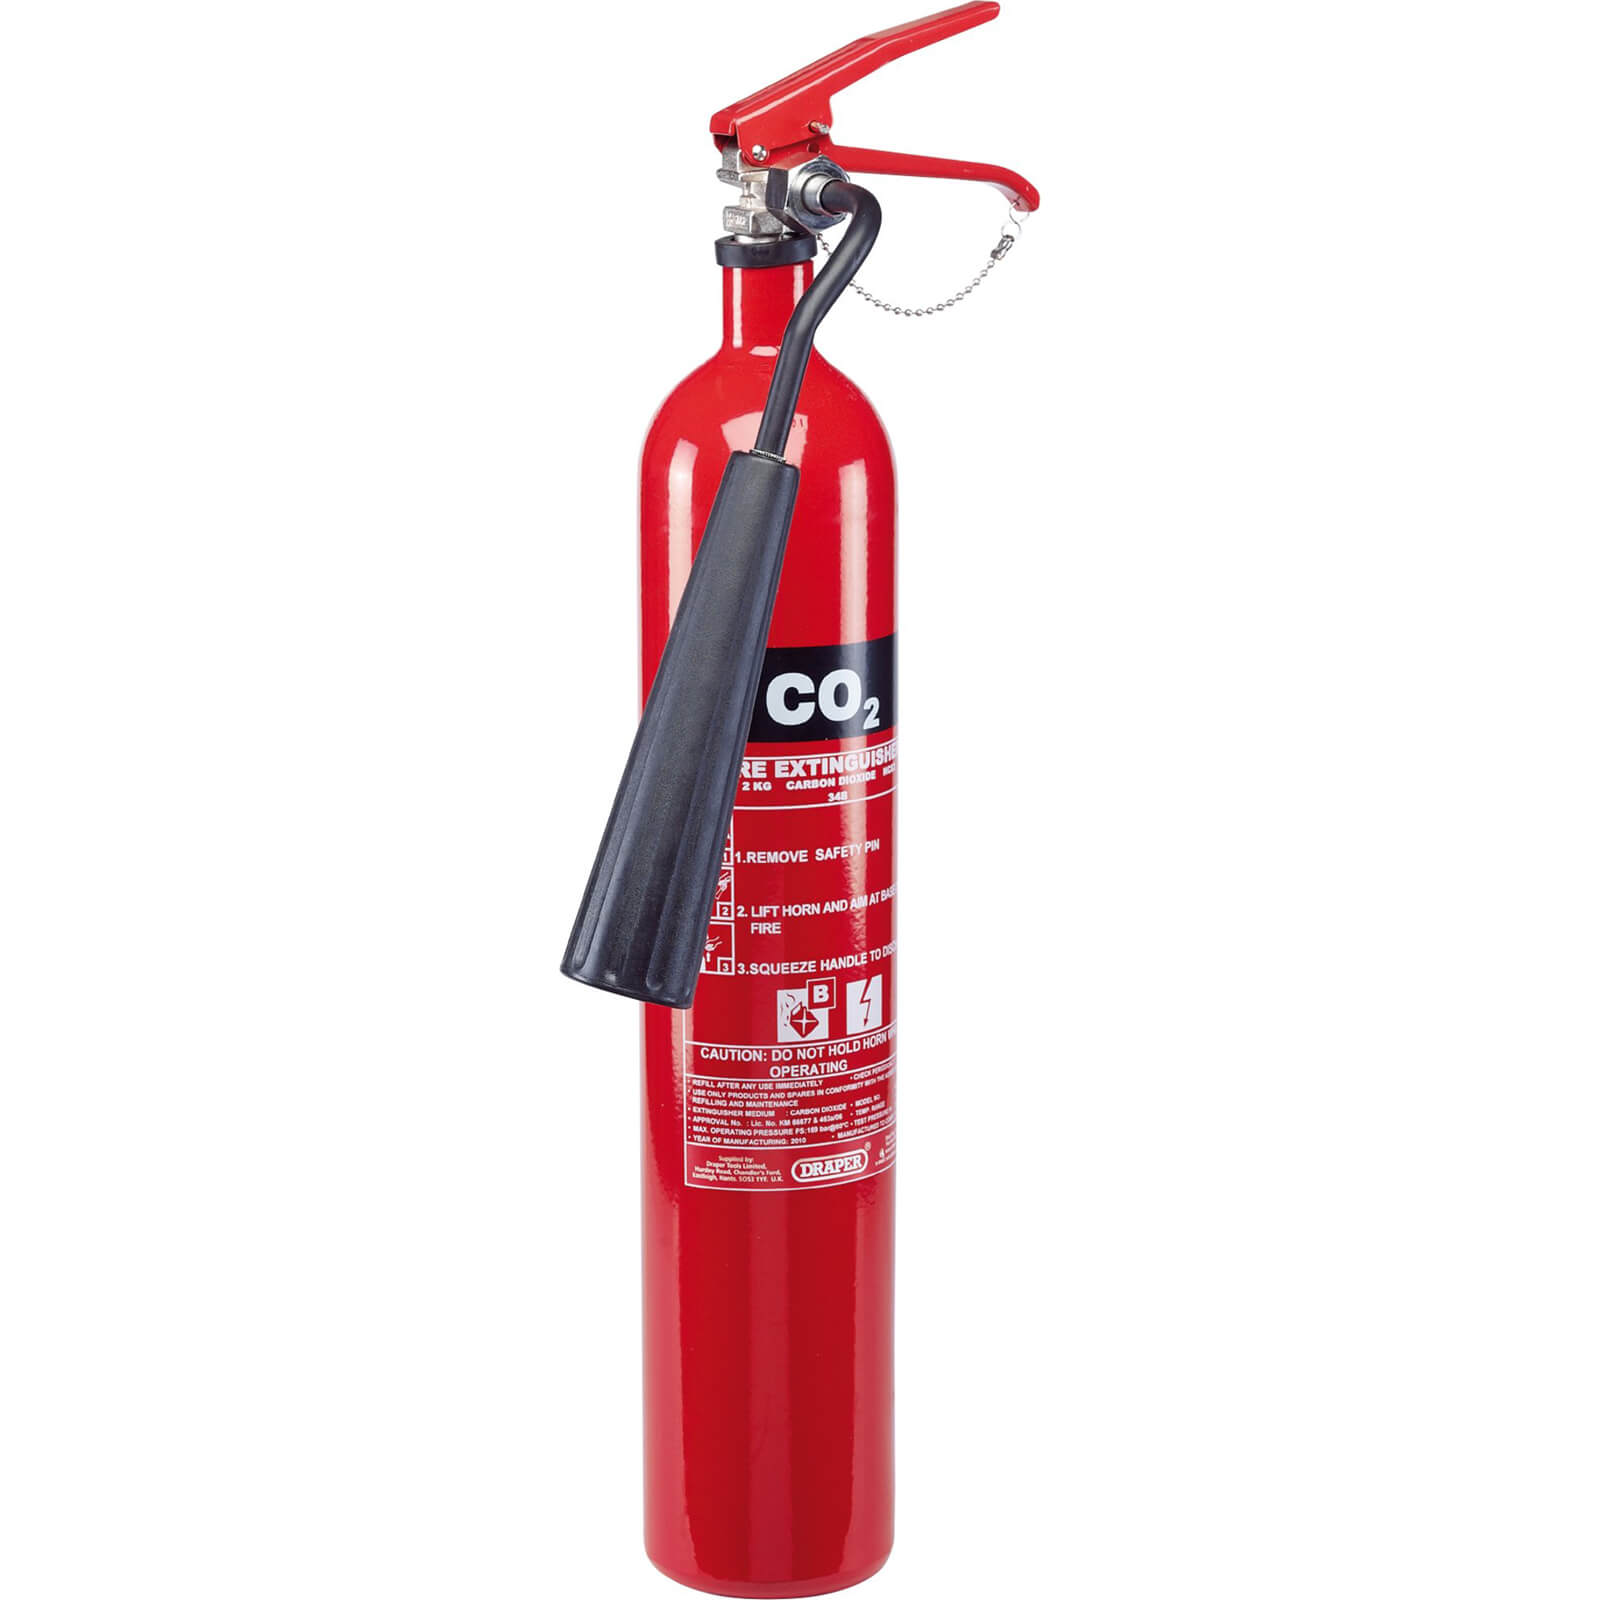 Image of Draper Carbon Dioxide Fire Extinguisher